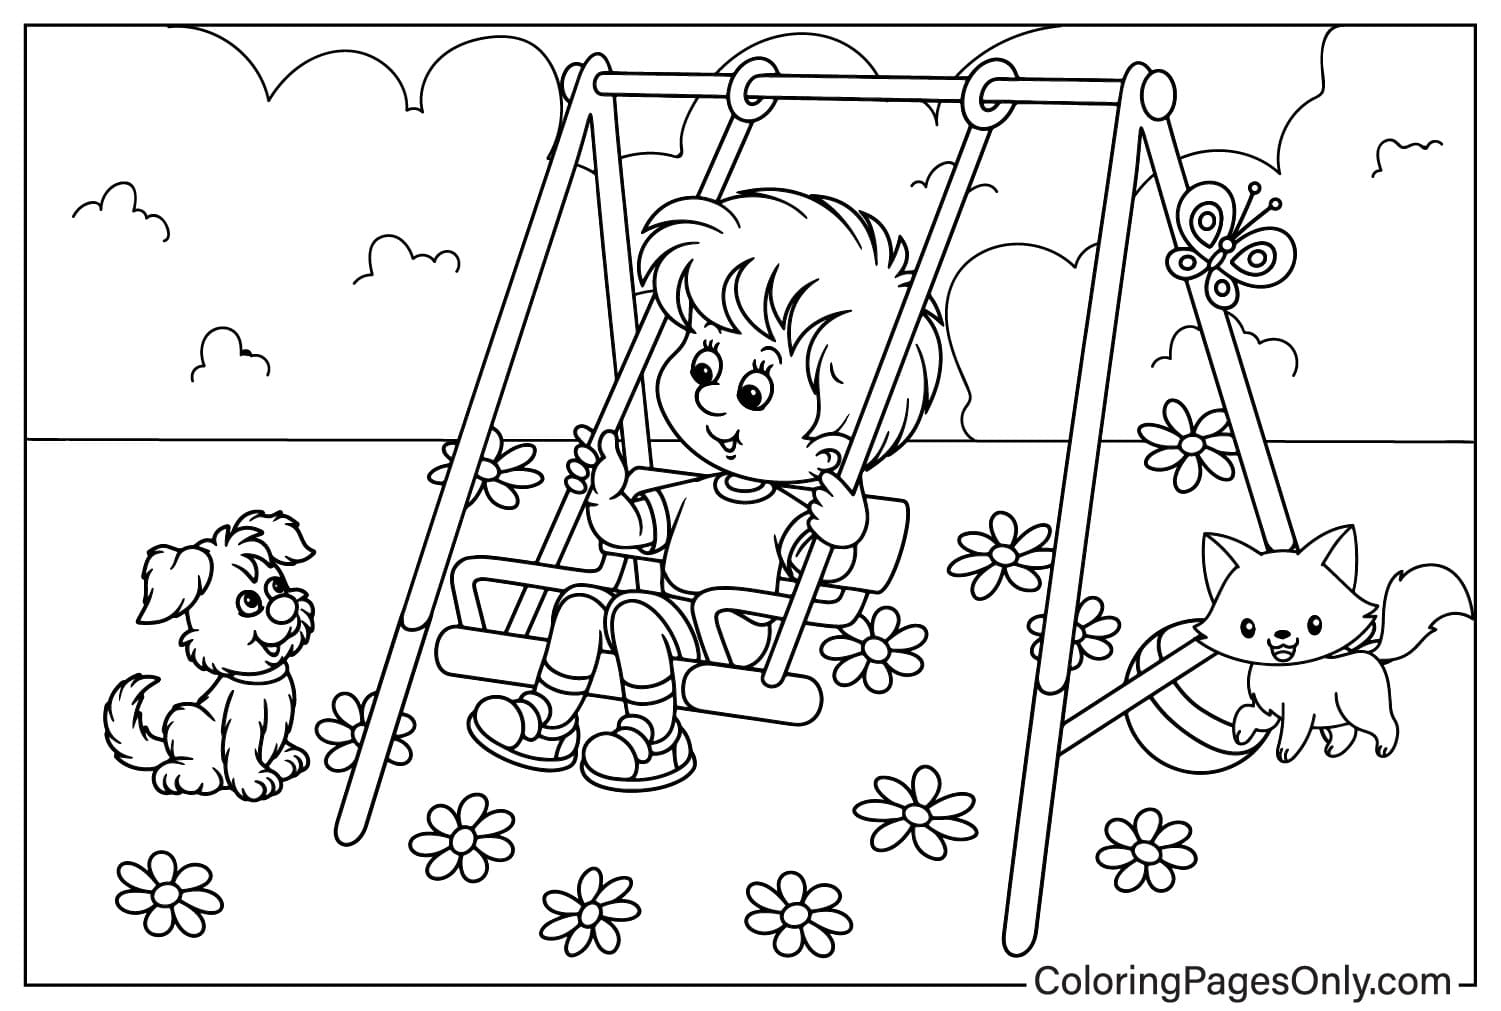 Imprimir página para colorear de Playground desde Playground